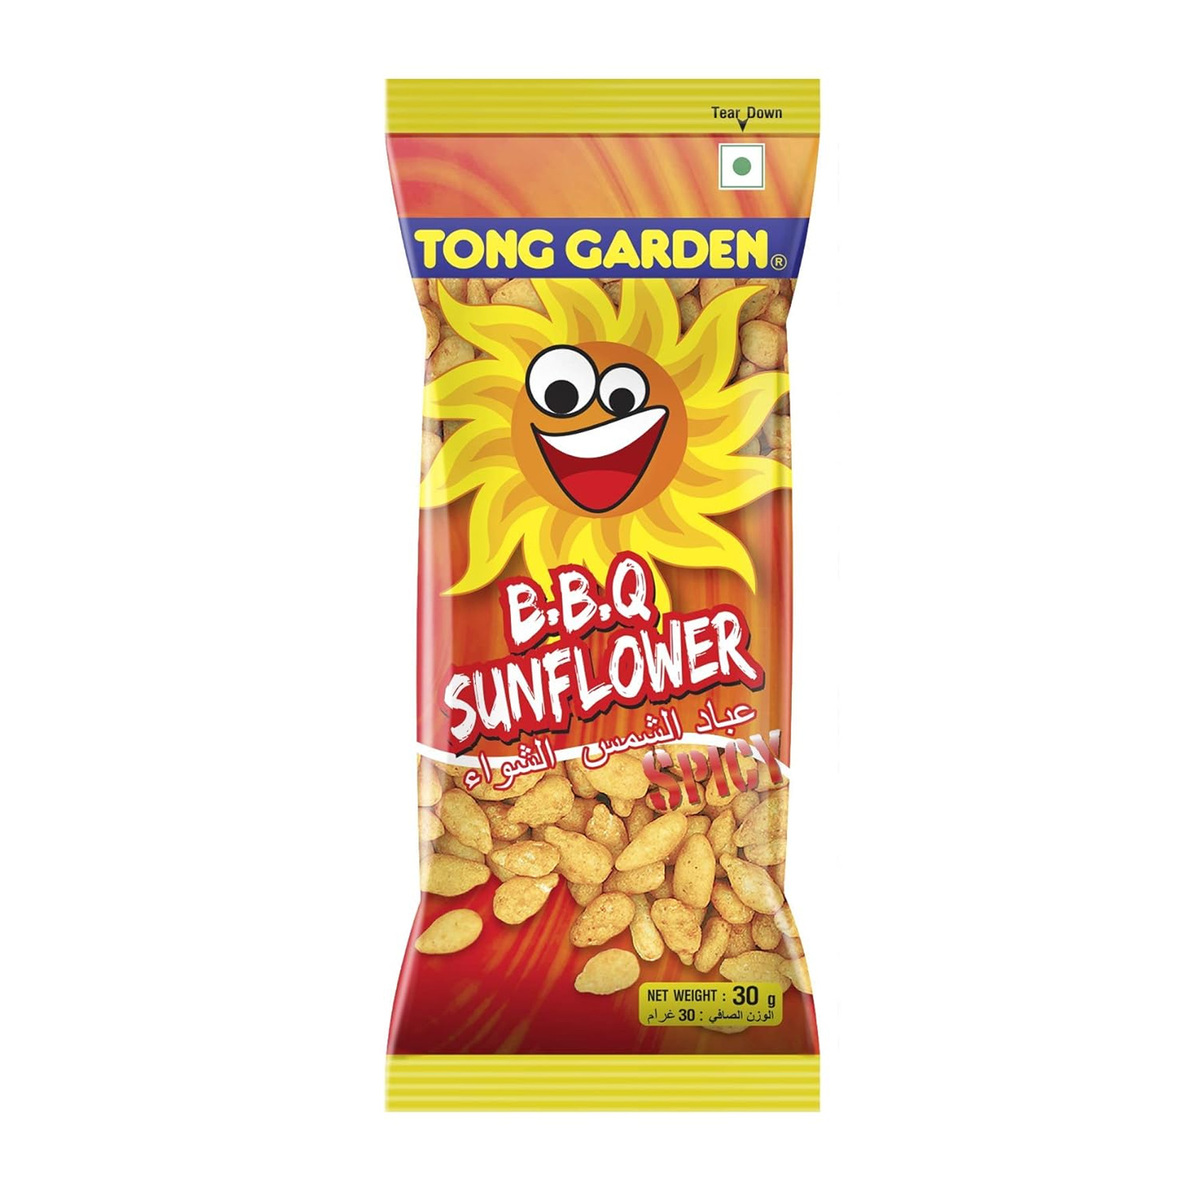 Tong Garden BBQ Sunflower Seed Spicy 30 g